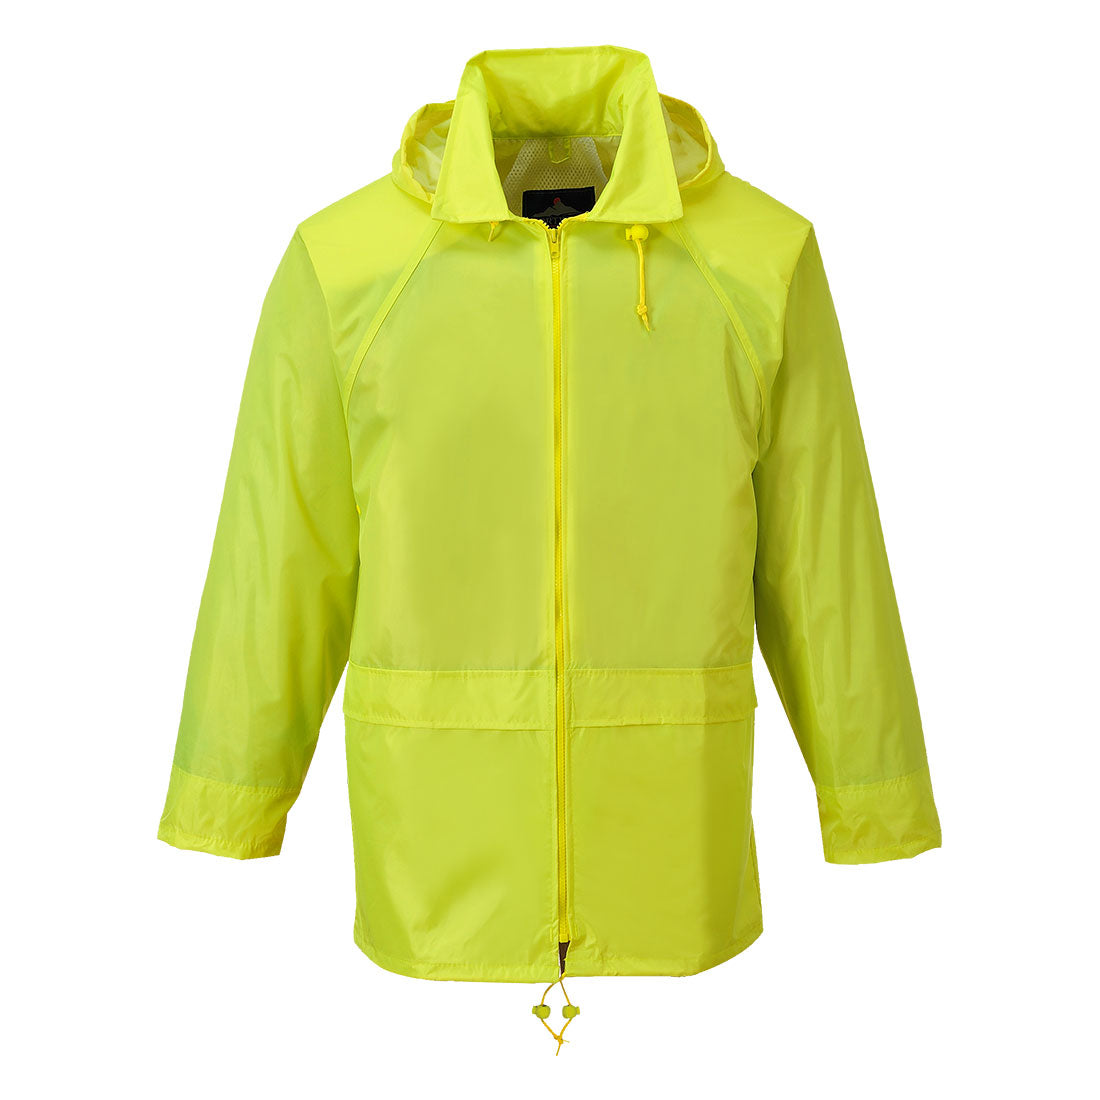 Portwest S440 Yellow Sz 4XL Classic Rain Jacket Coat Waterproof Hooded Zipped